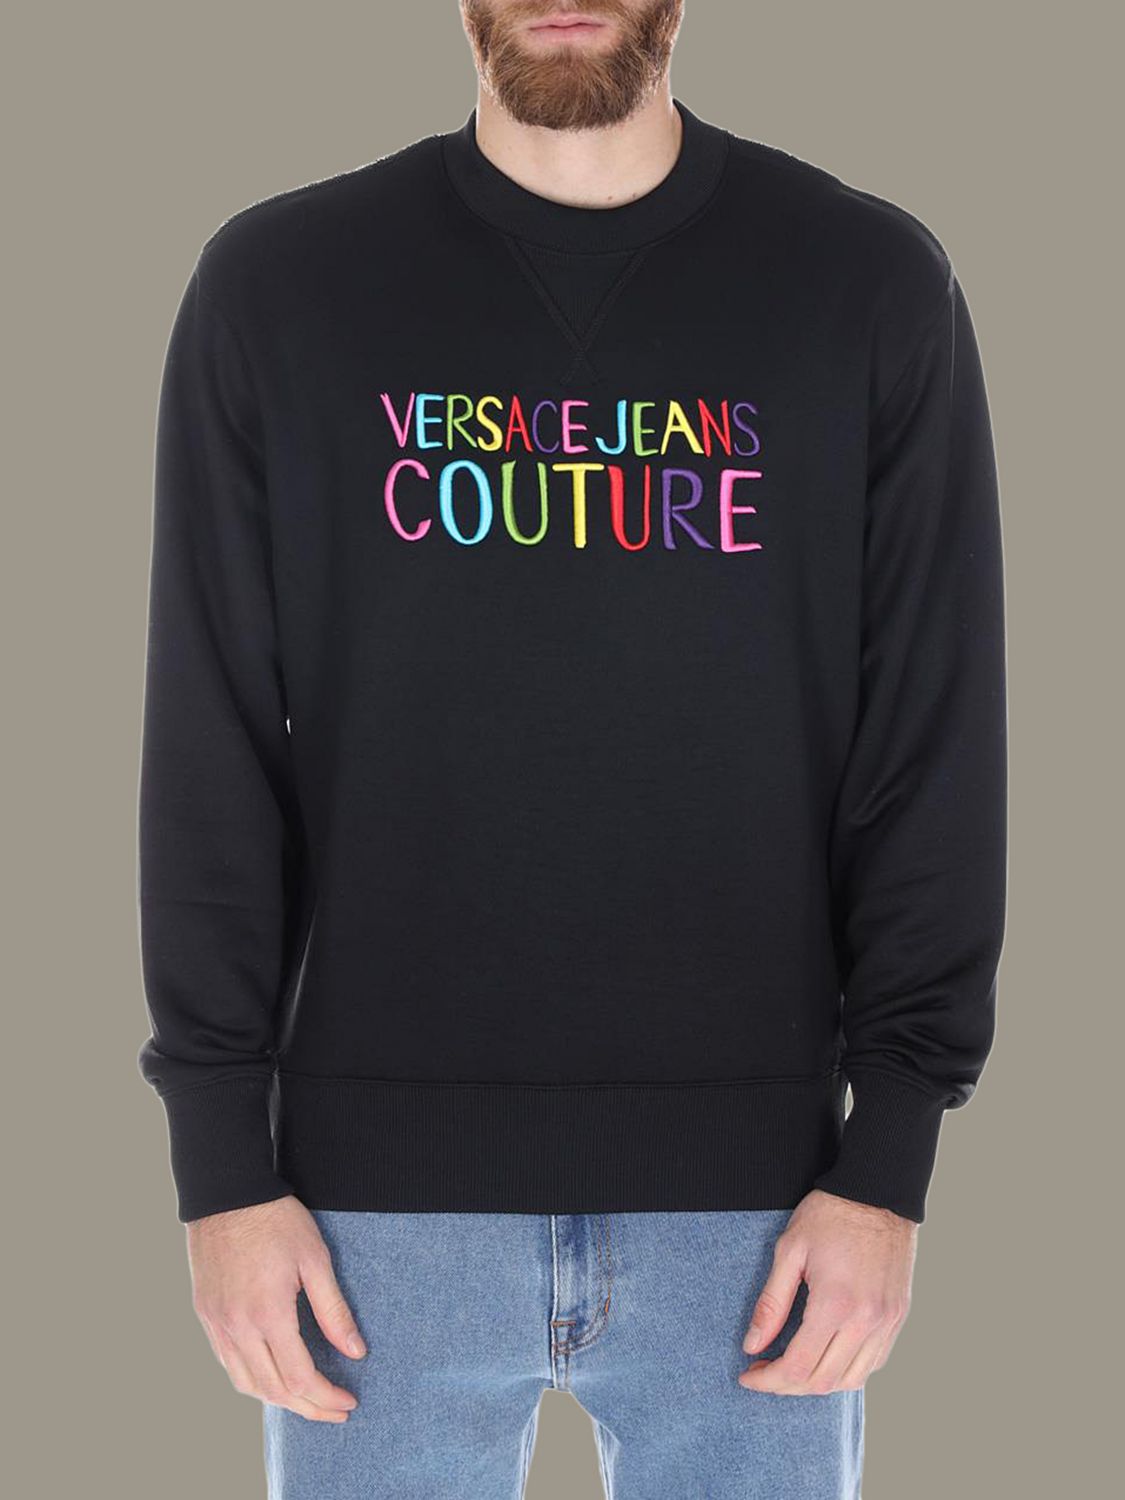 Versace Jeans Outlet: crewneck sweatshirt with logo - Black | Versace ...